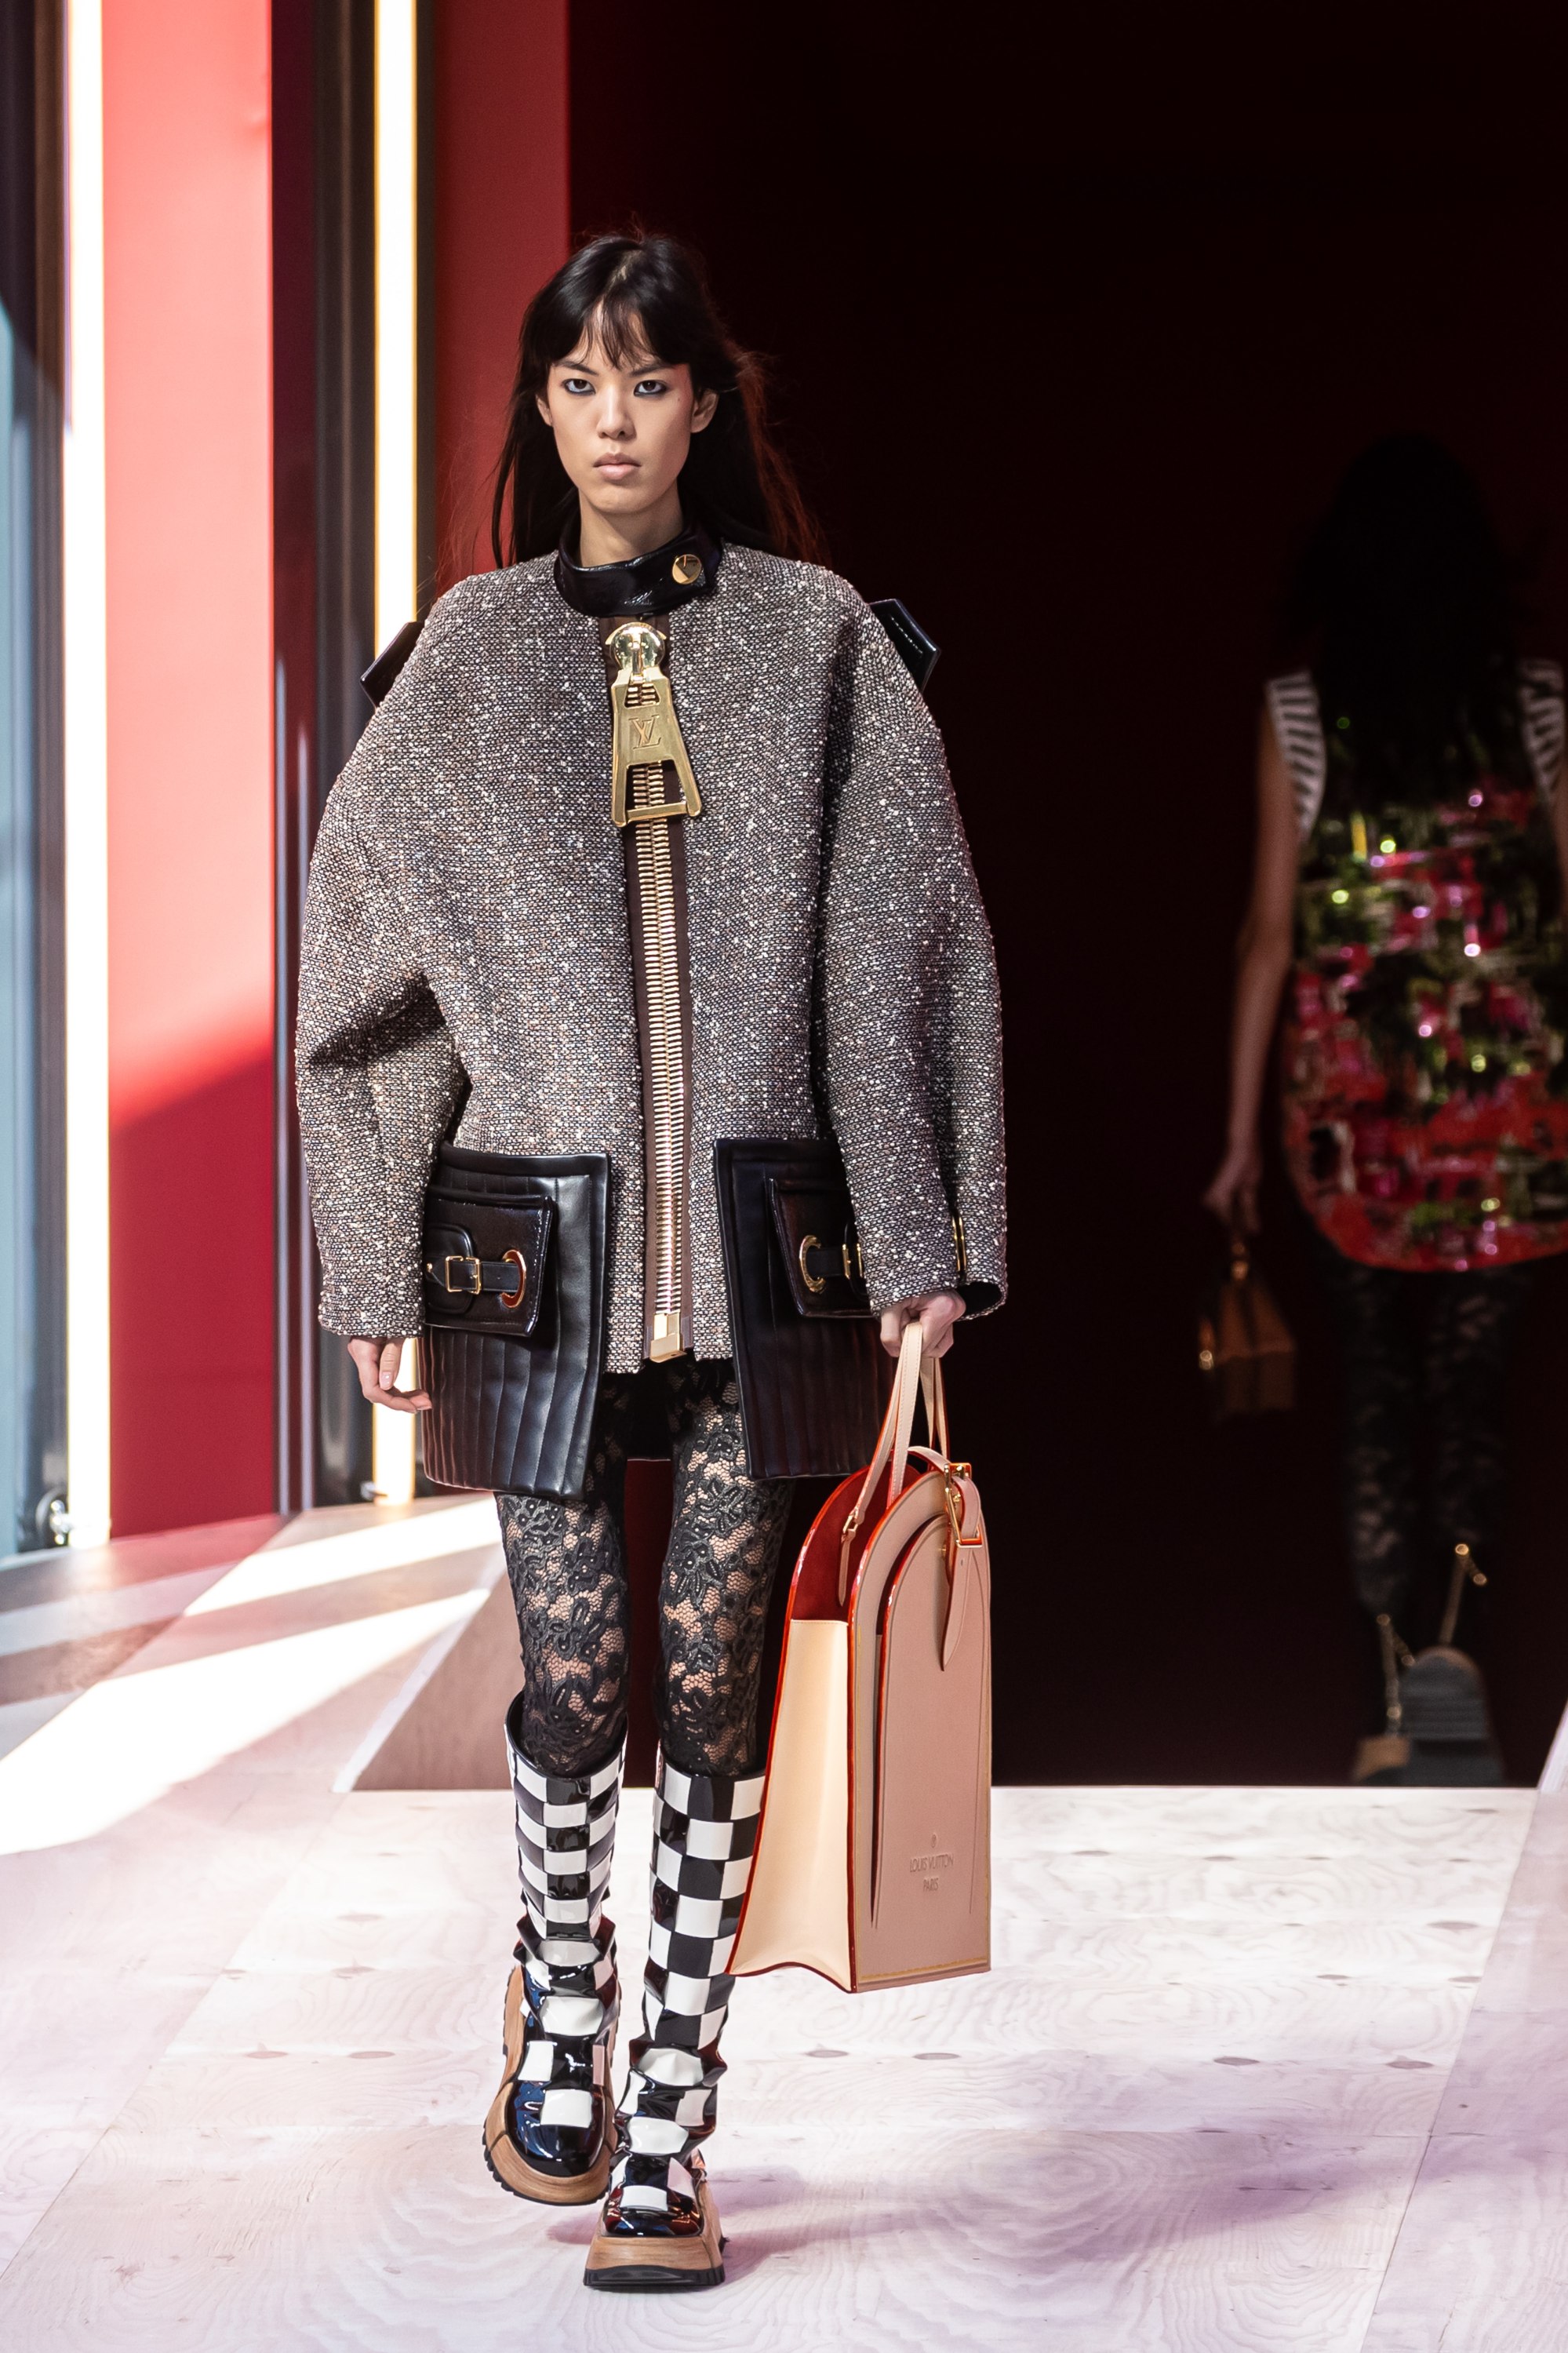 Paris Fashion Week: Louis Vuitton’s spring/summer 2023 show brought a ...